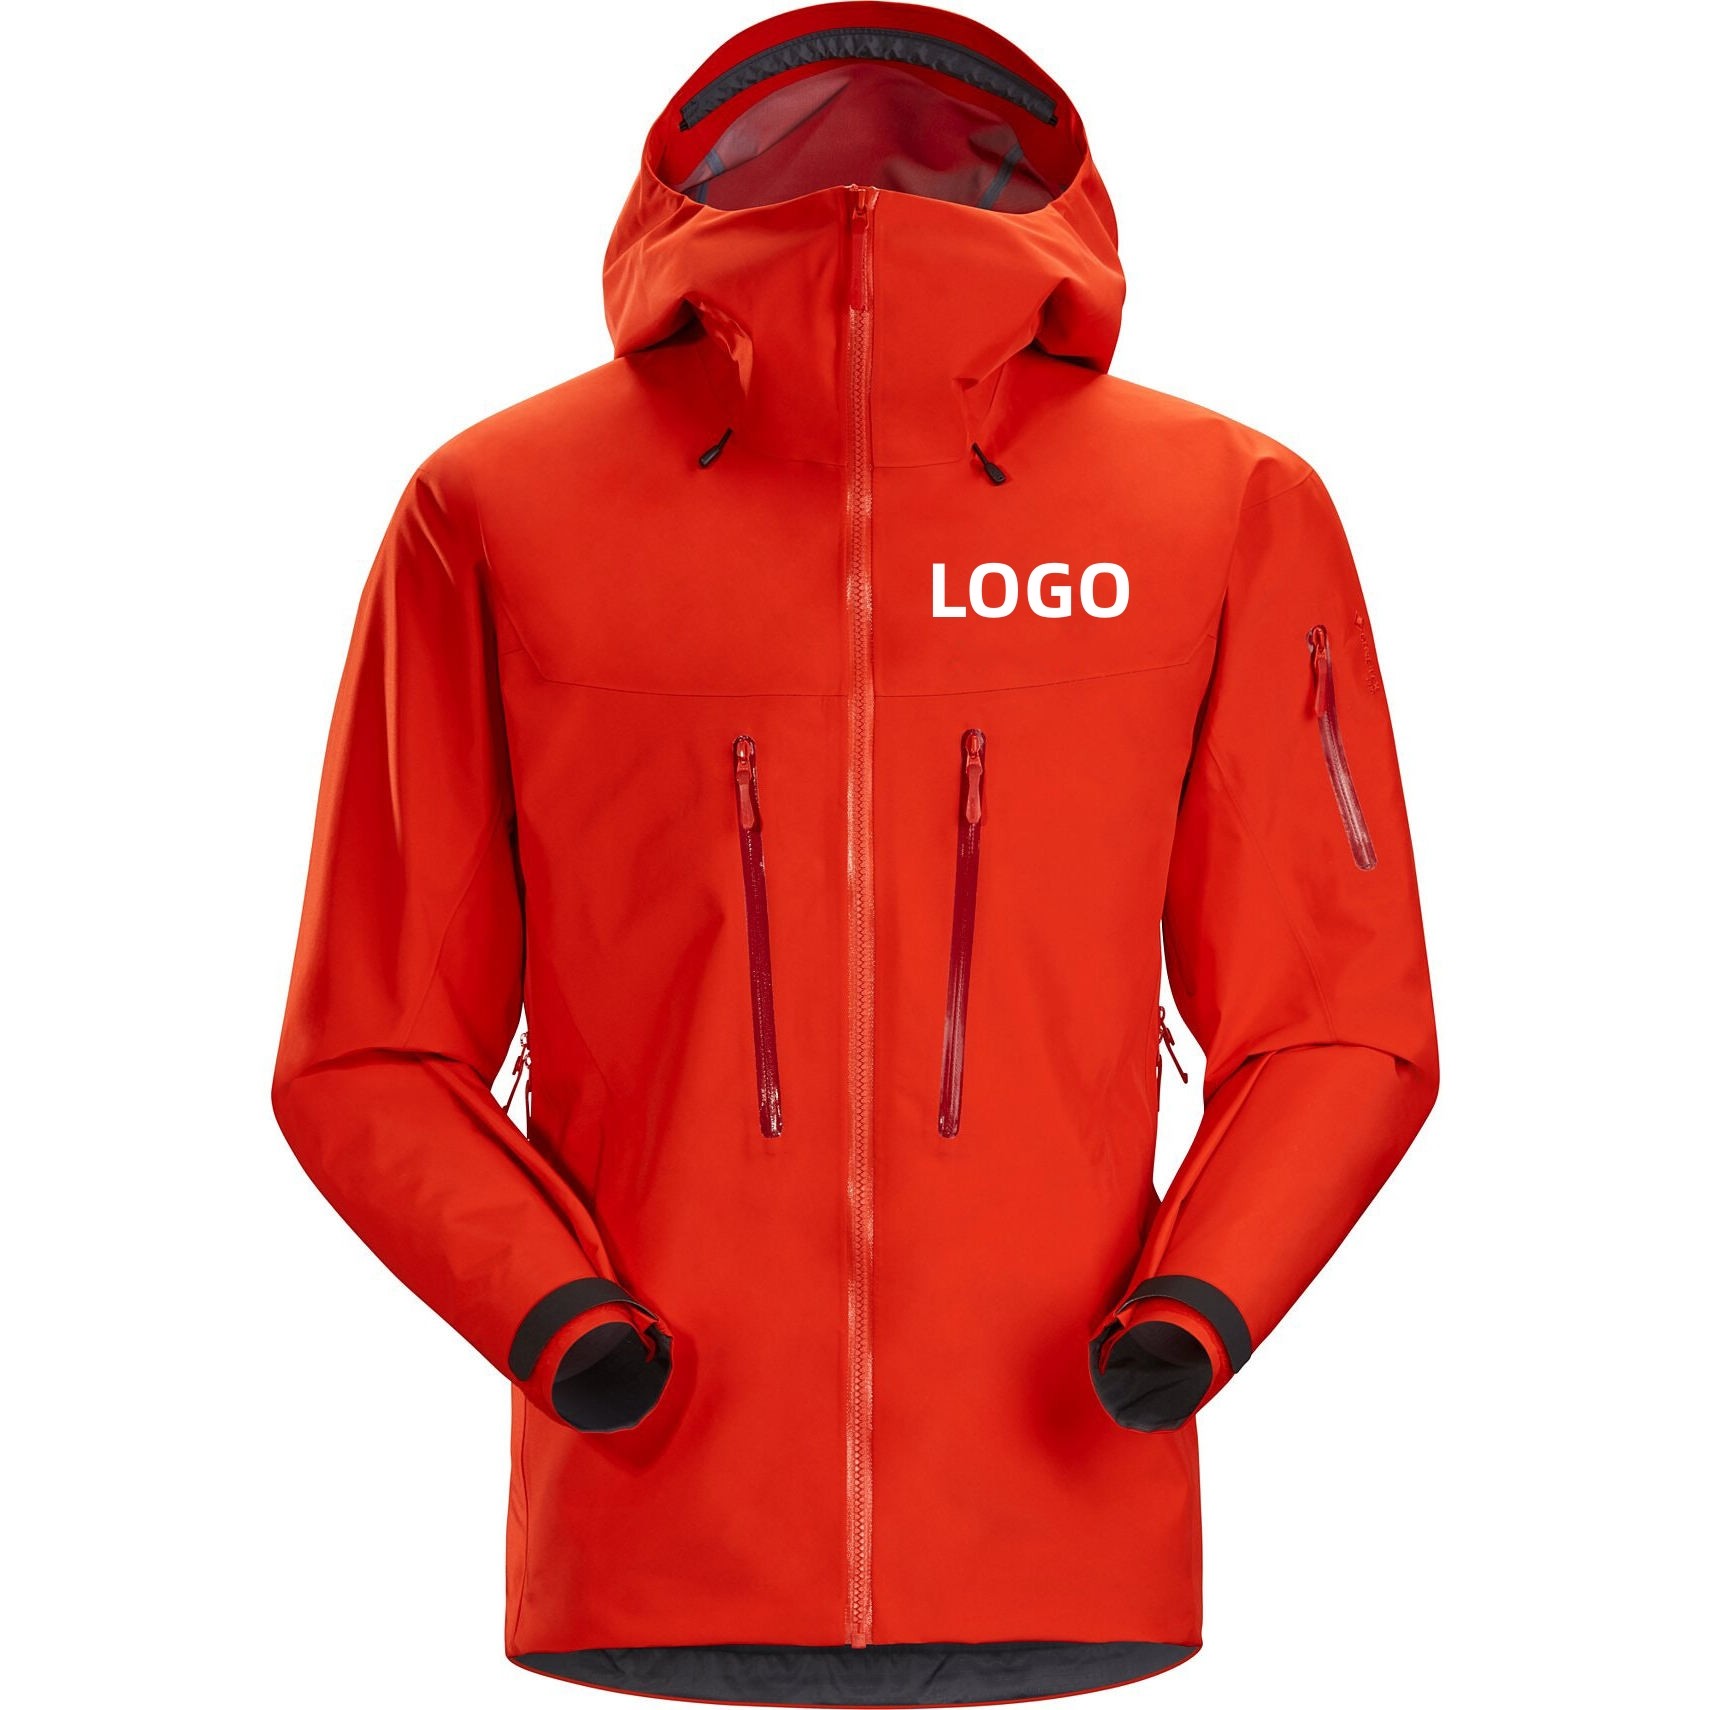 Quality Men's Waterproof Jacket Outdoor Sport Soft Shell With Hood Jacket Running Hiking Rain Jacket windbreaker for sale